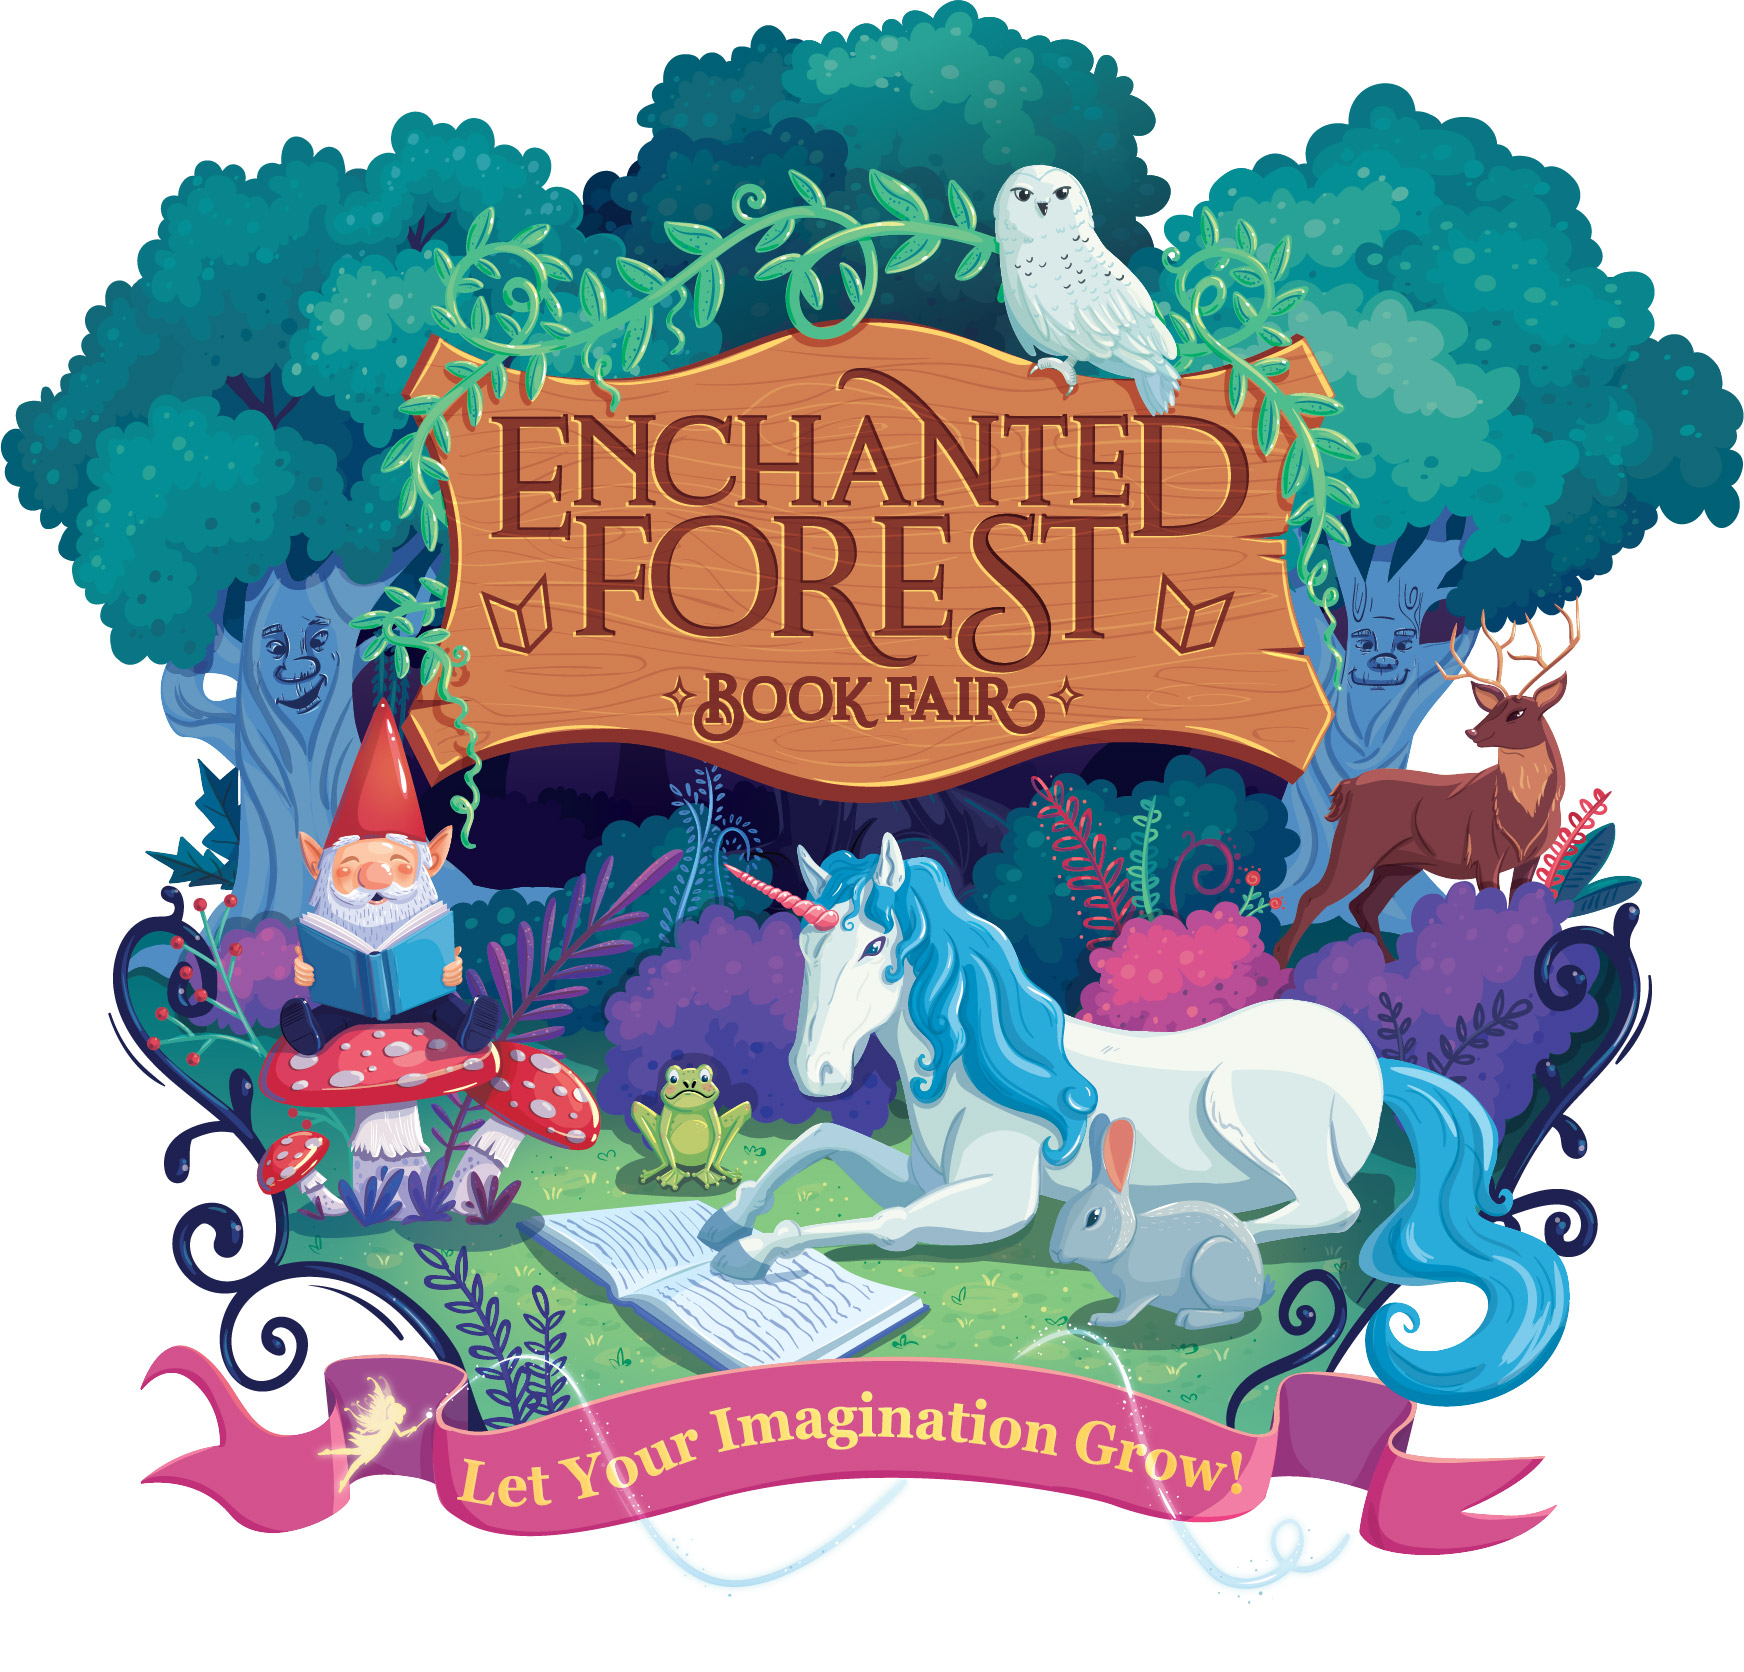 Enchanted Forest Book Fair logo